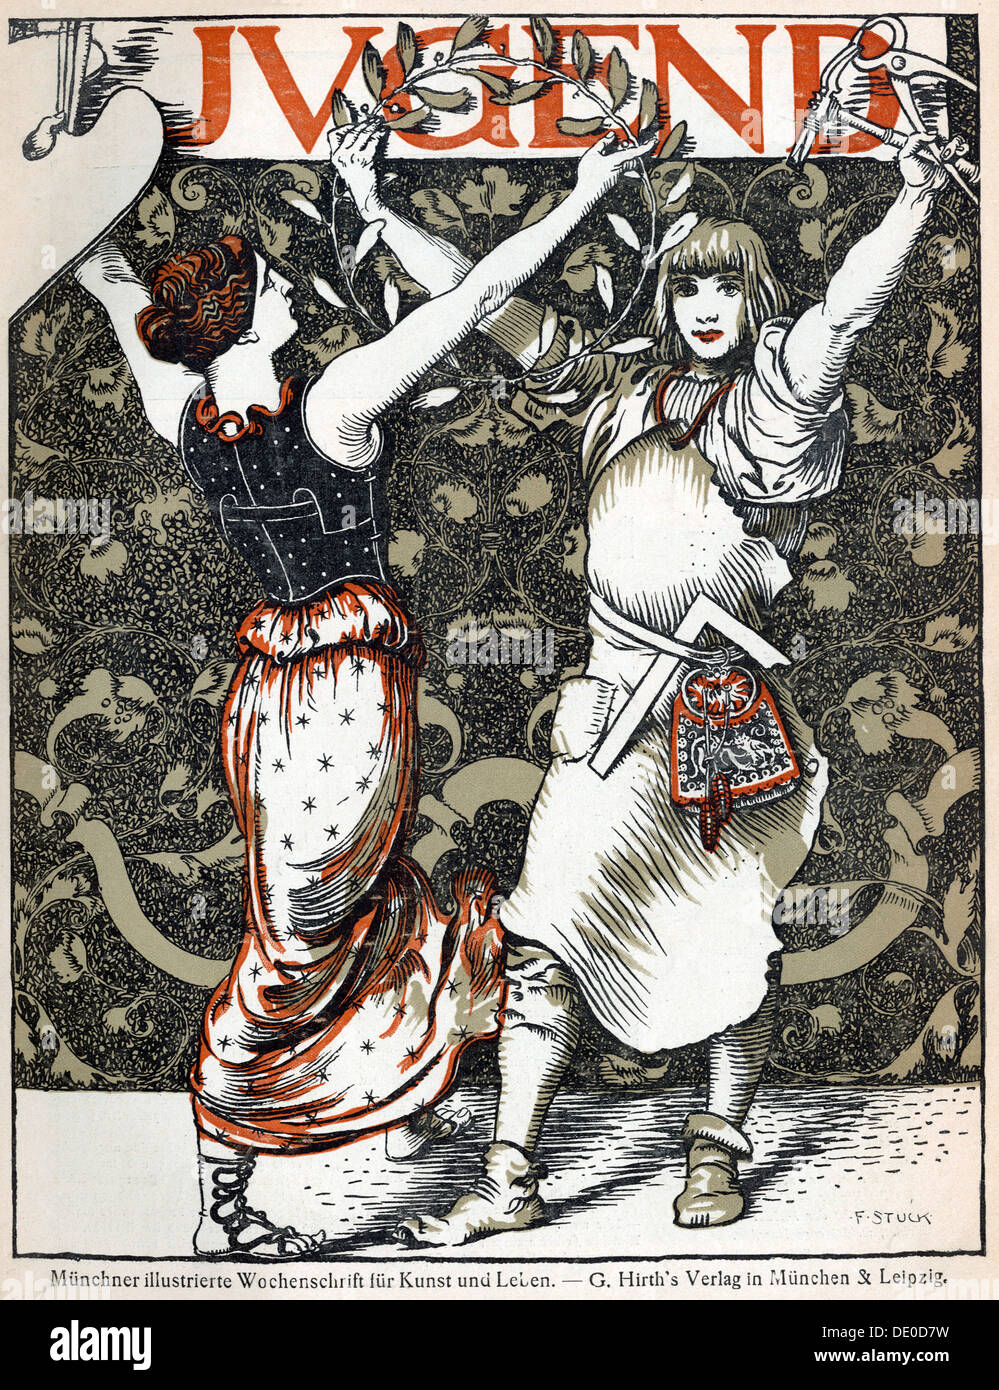 Cover of the German weekly art magazine Jugend, 1898. Artist: Franz von Stuck Stock Photo